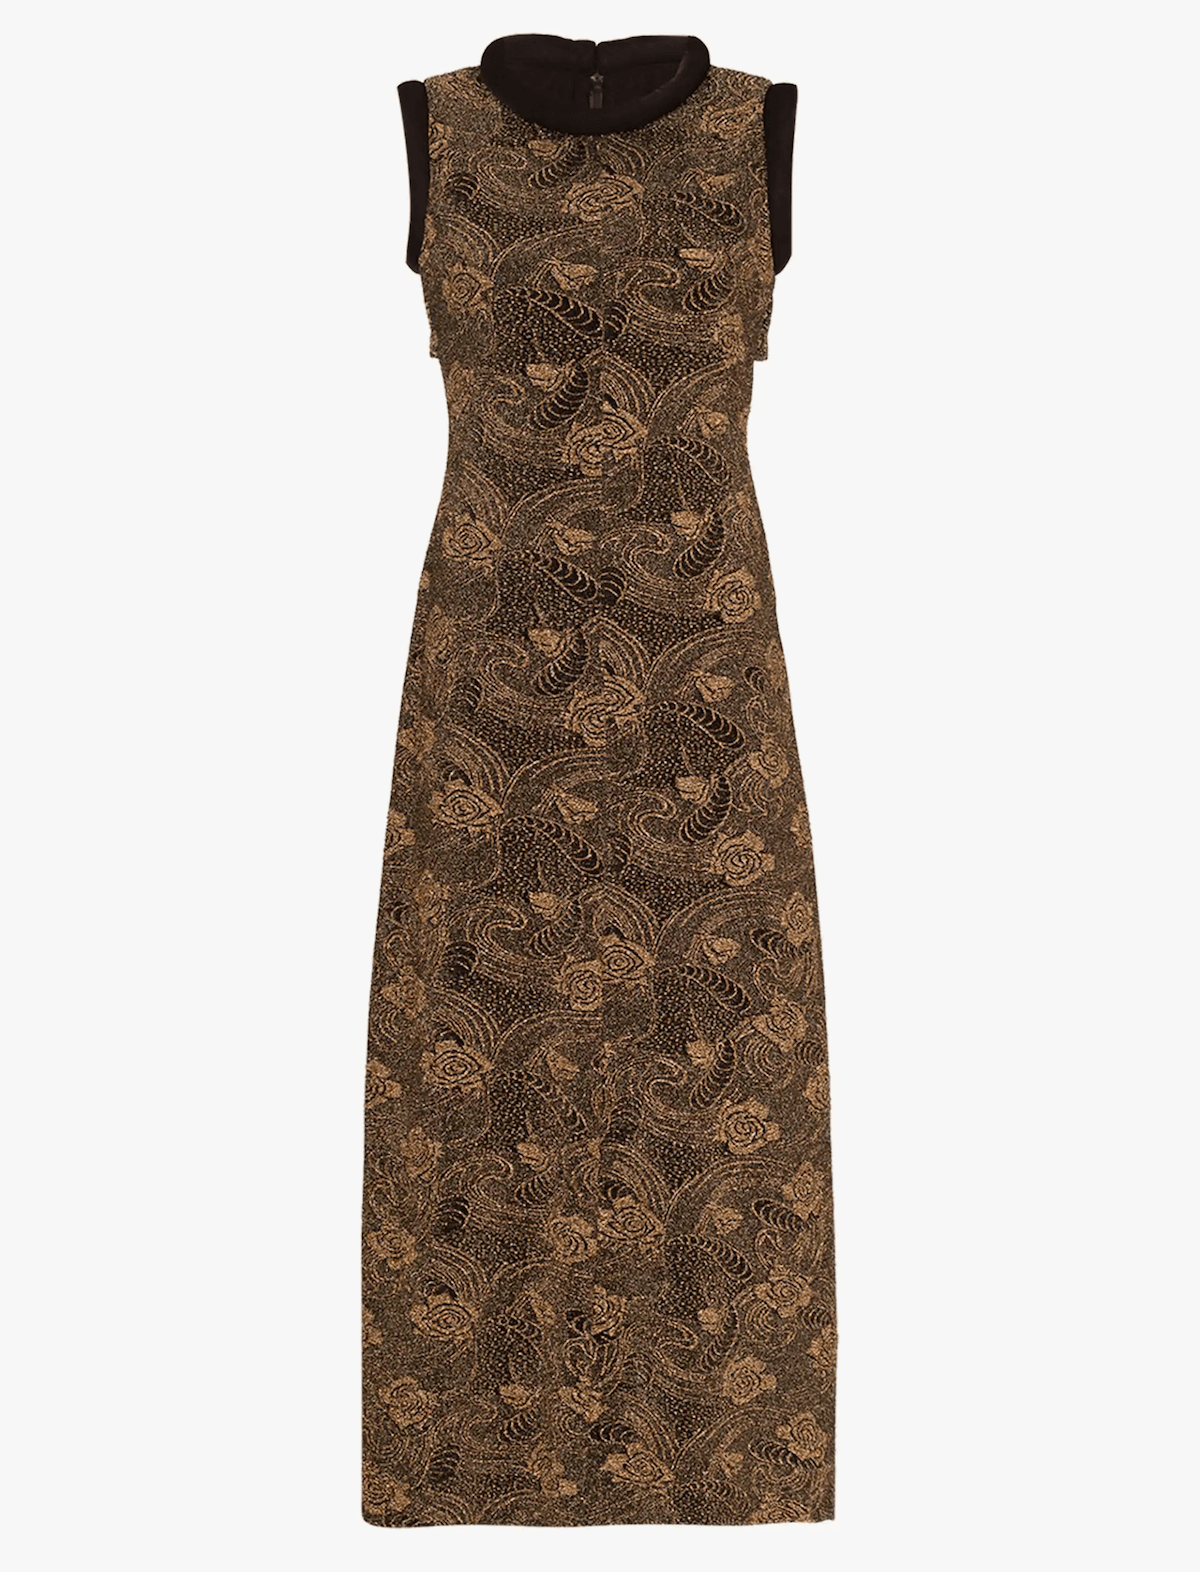 Embroidered Suki Dress in Metallic Brown | CLOSET Singapore